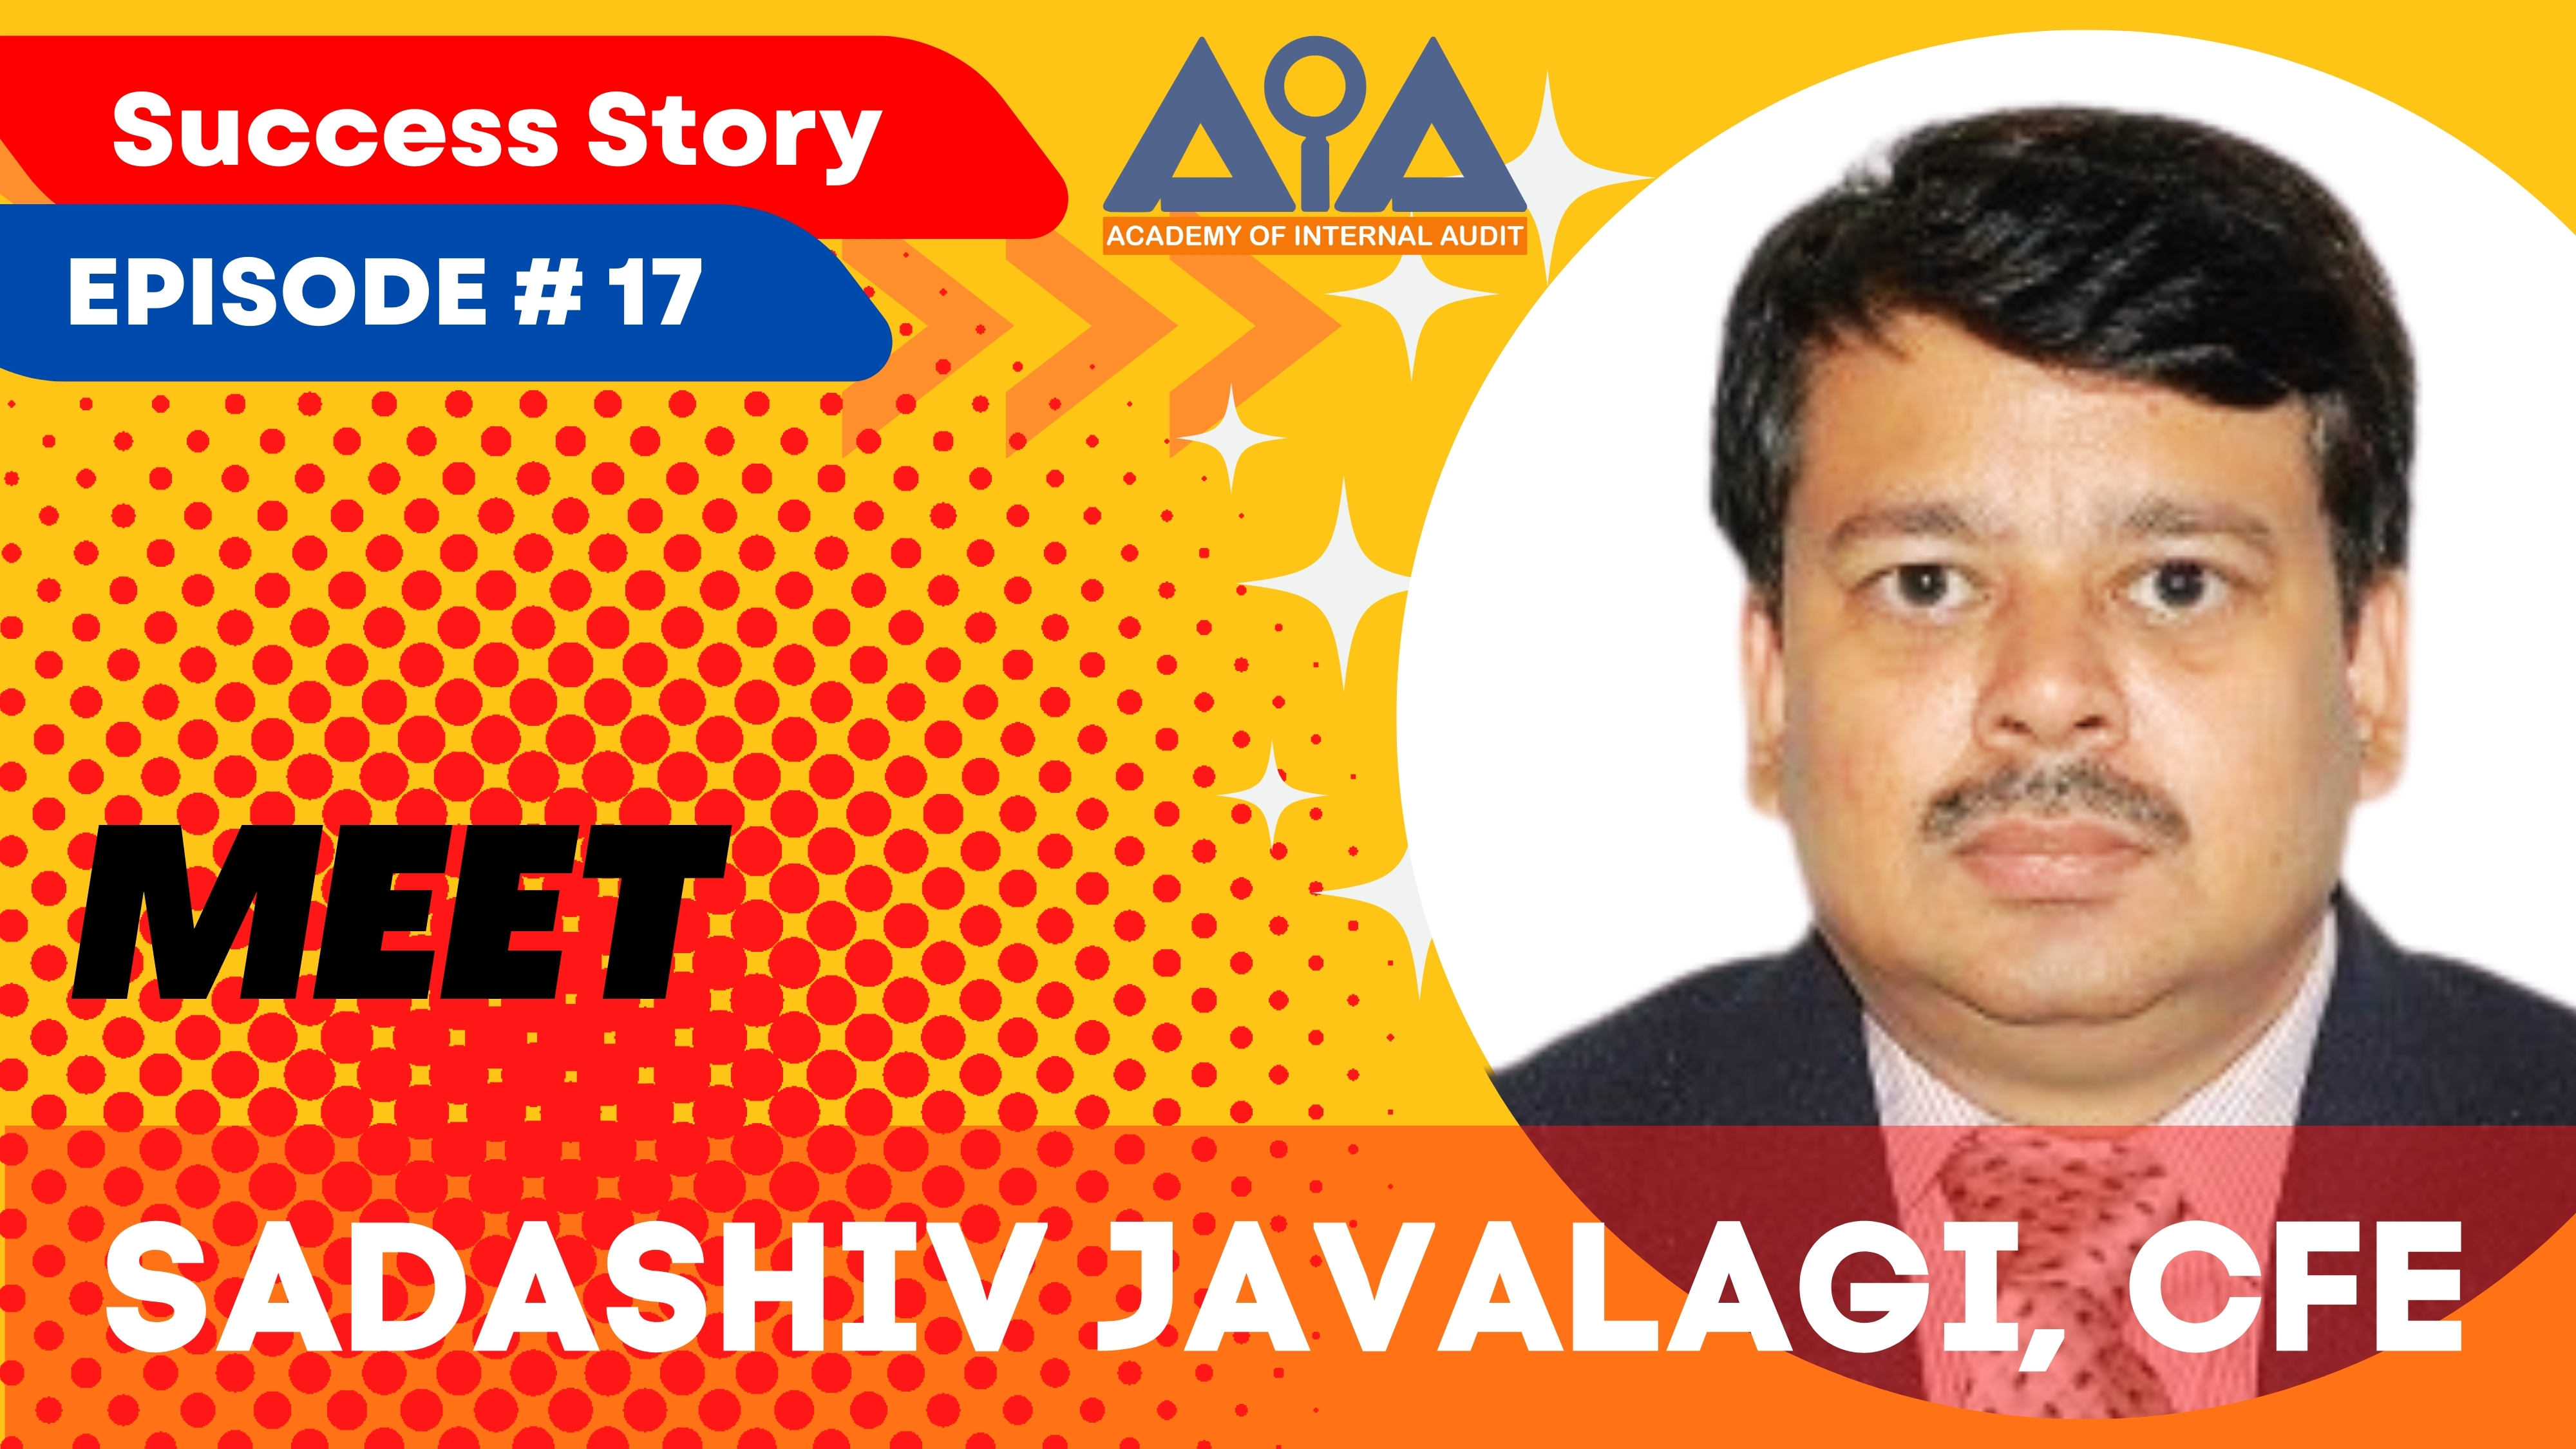 Success Story of Sadashiv Ep17 - AIA